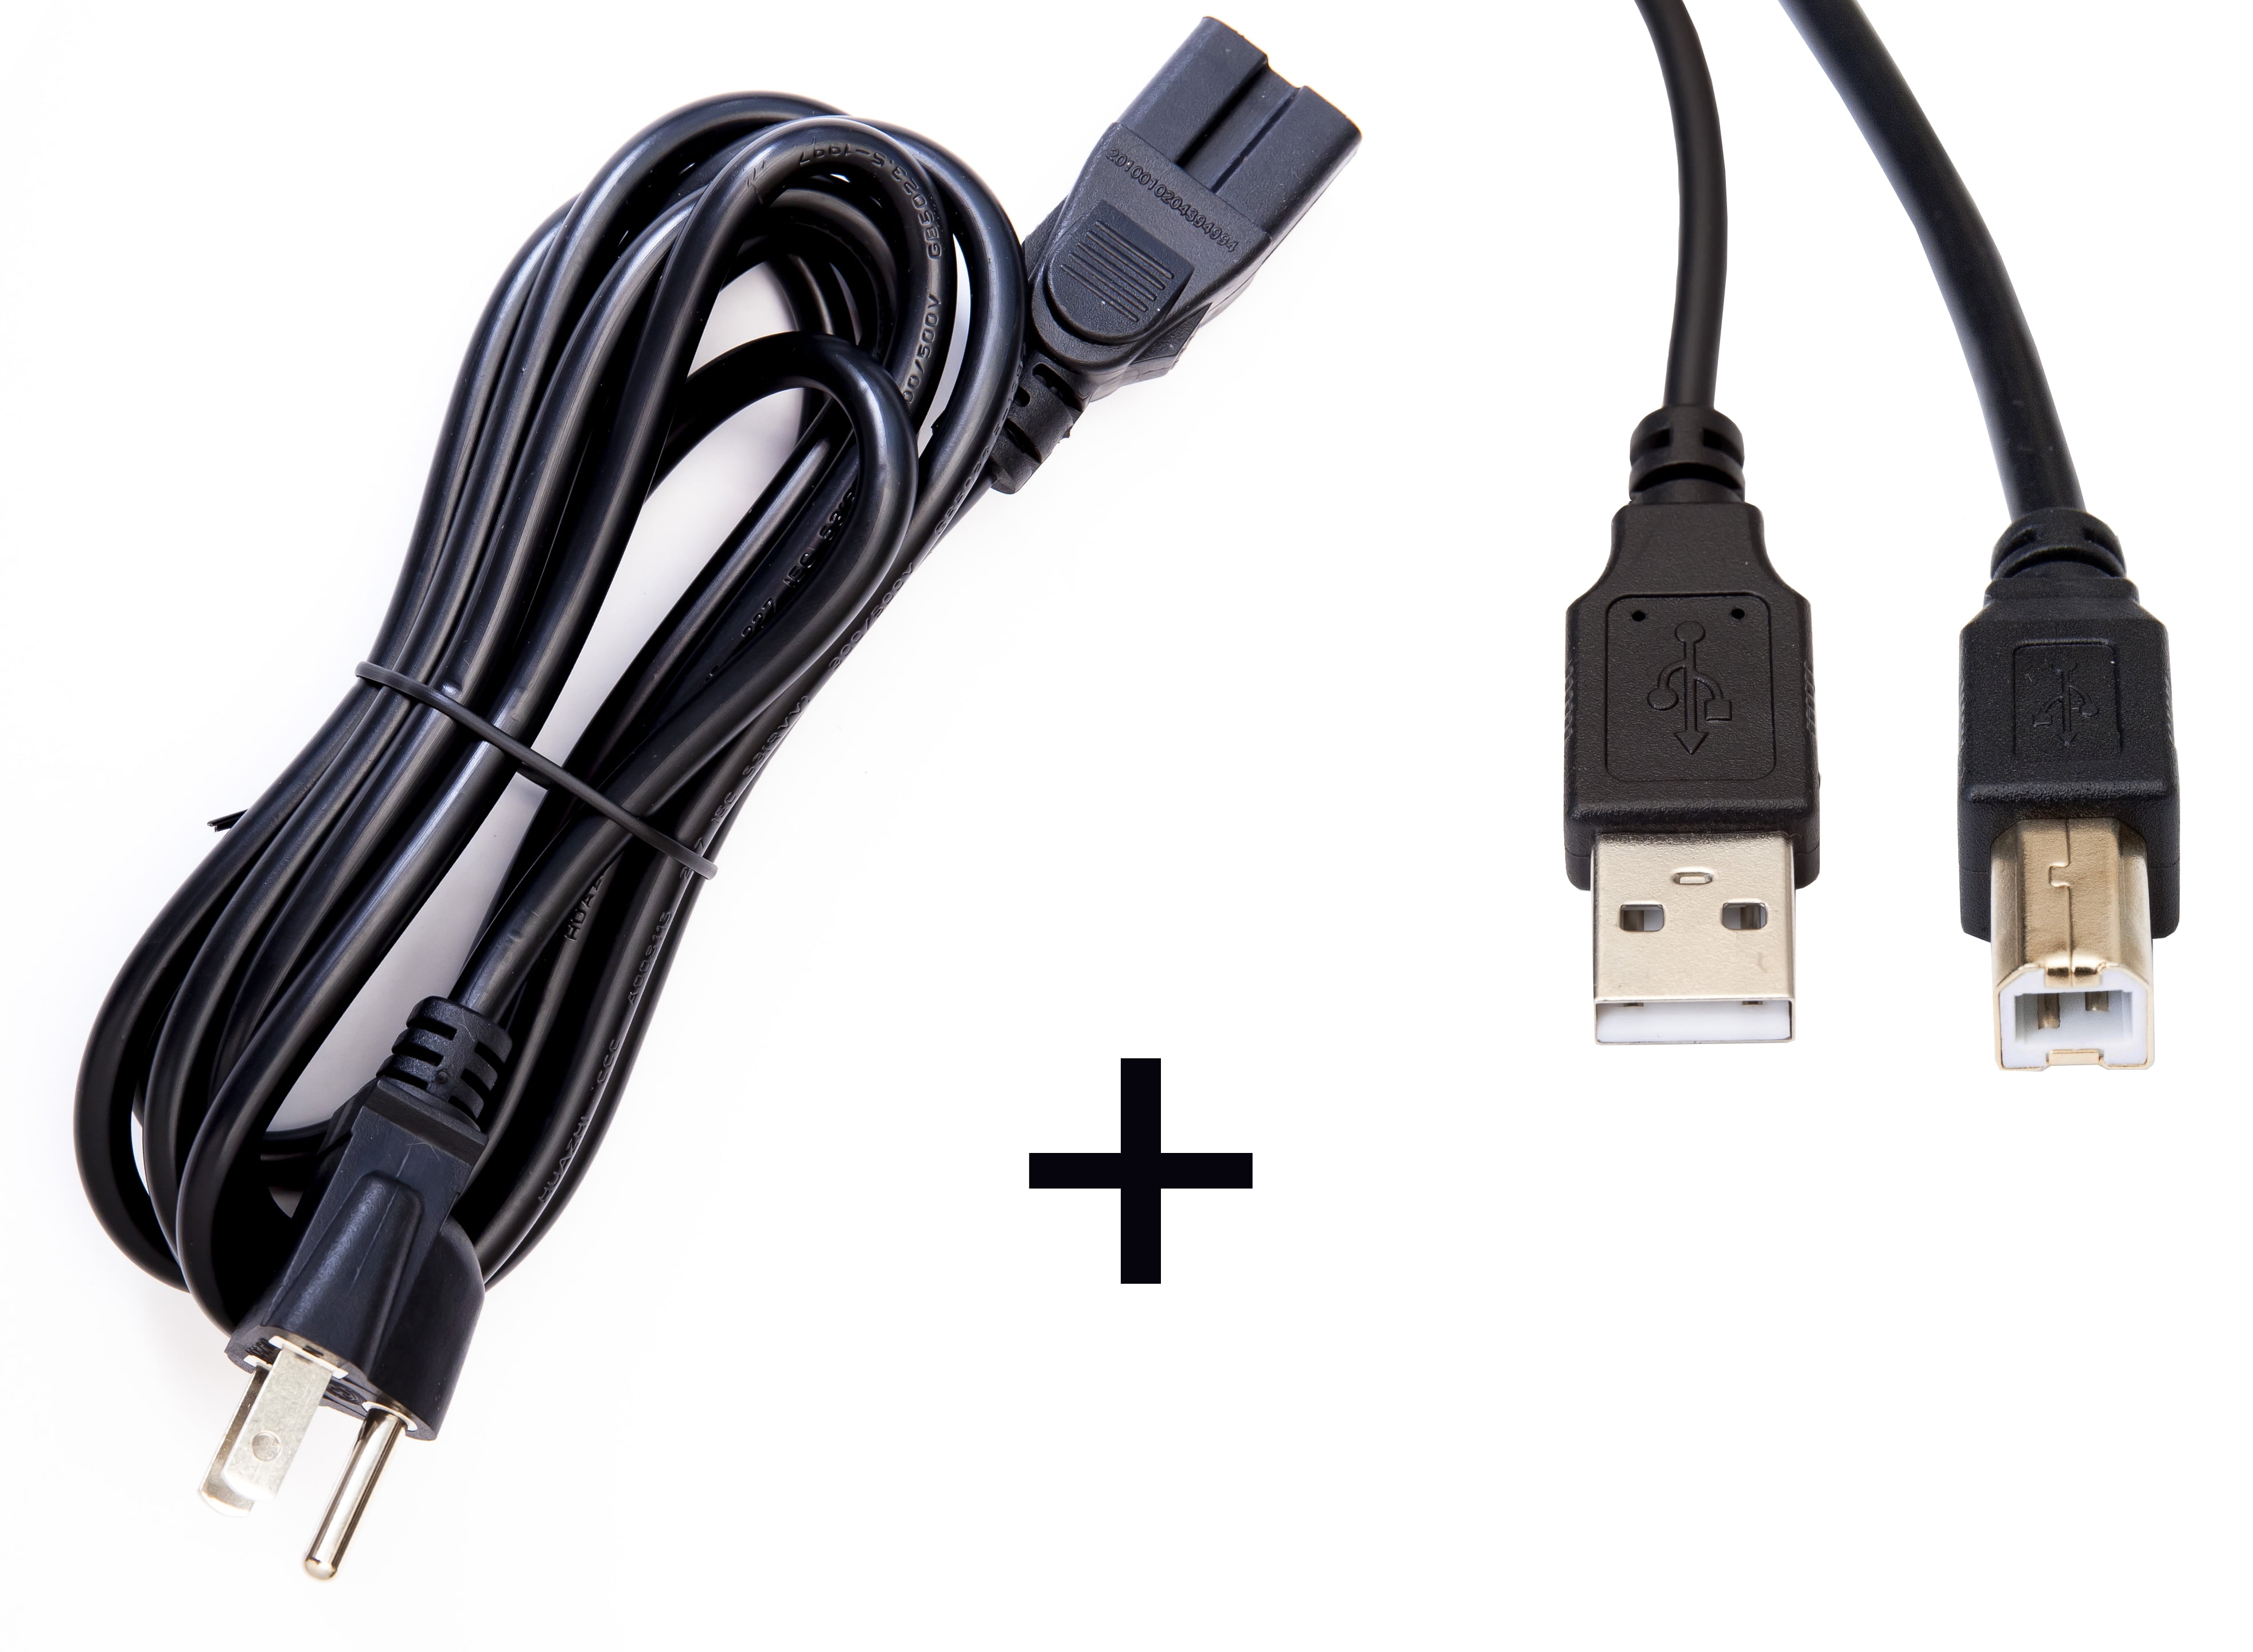 USB Cable Cord Canon AC Power Cord 6ft Figure 8 IP3000 IP4820 MP560 MP980 MG5220 MX892 Printer 